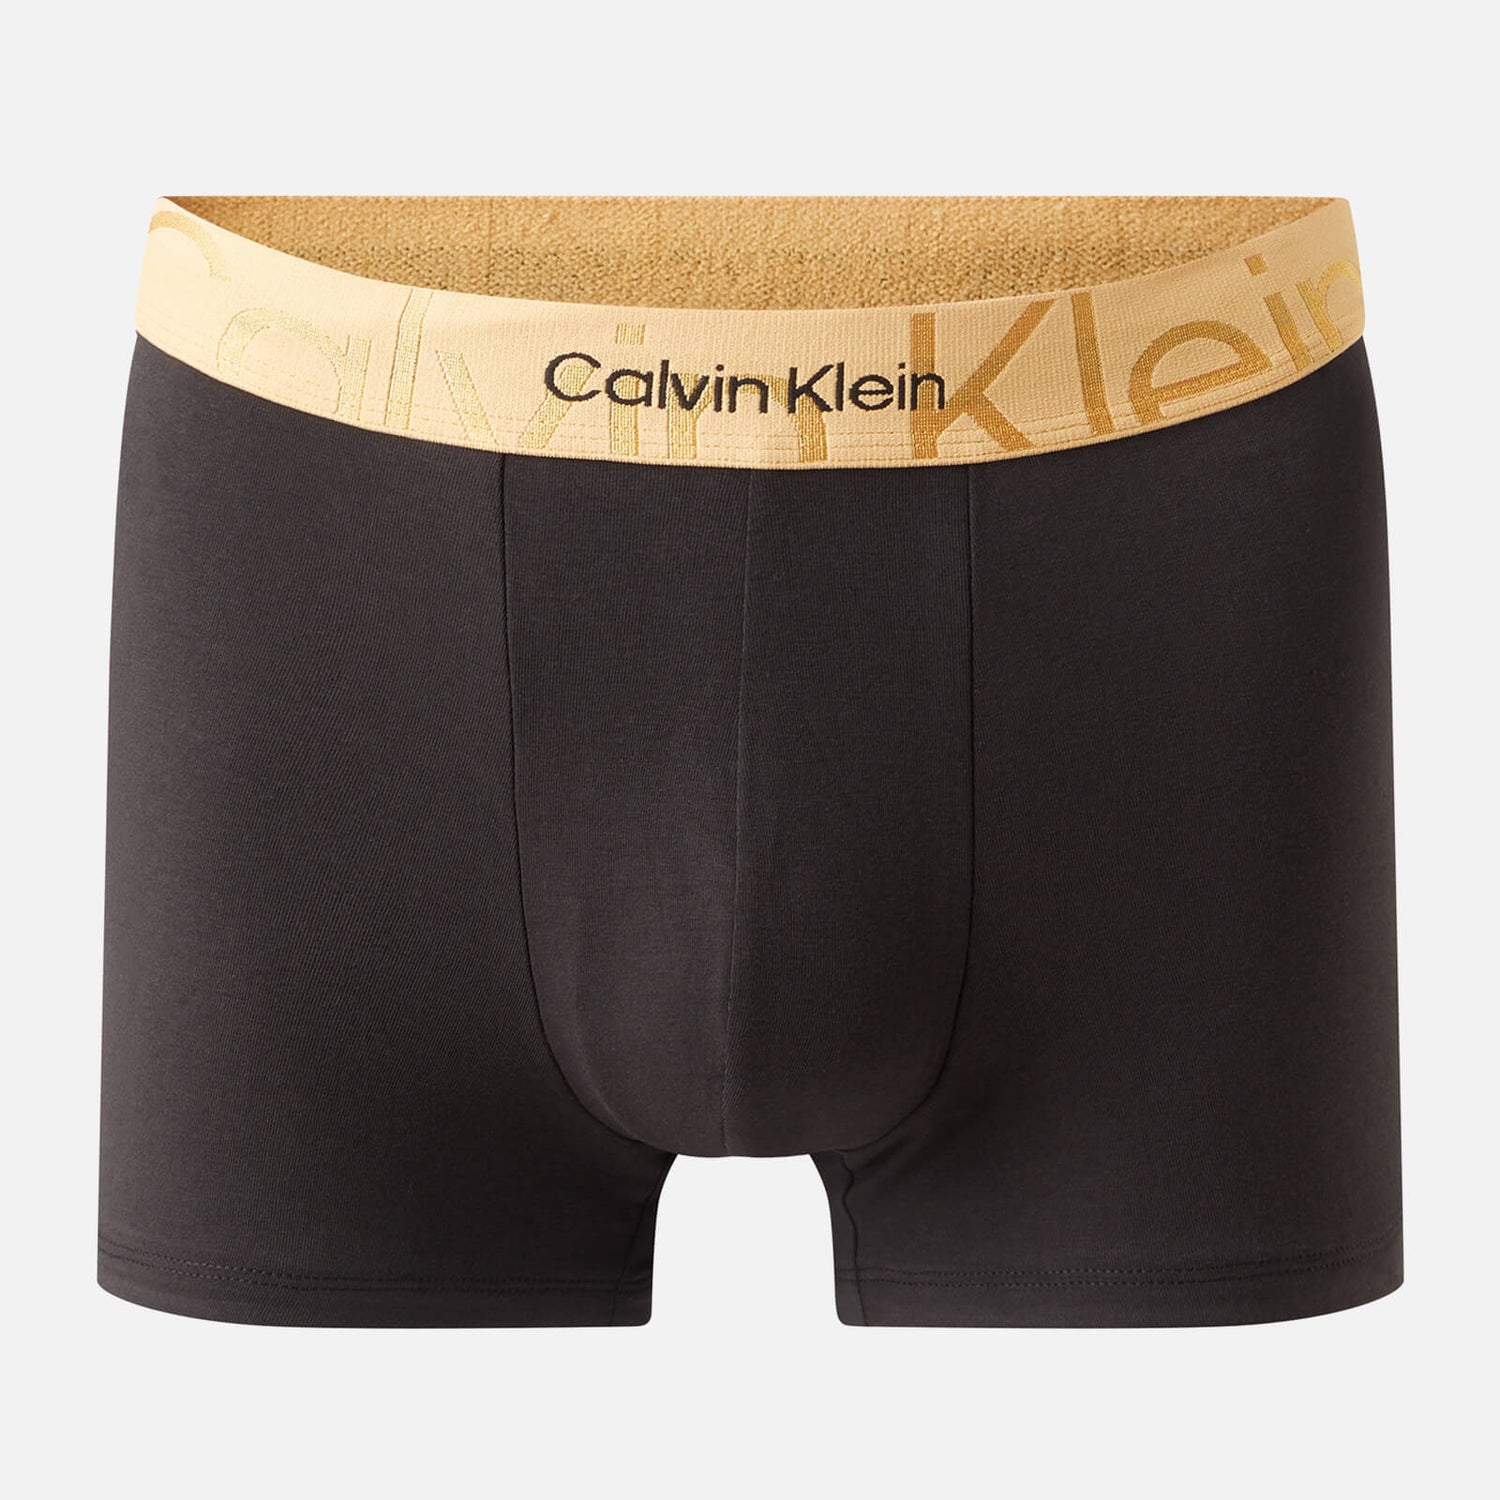 Calvin Klein Cotton-Blend Boxer Briefs - S